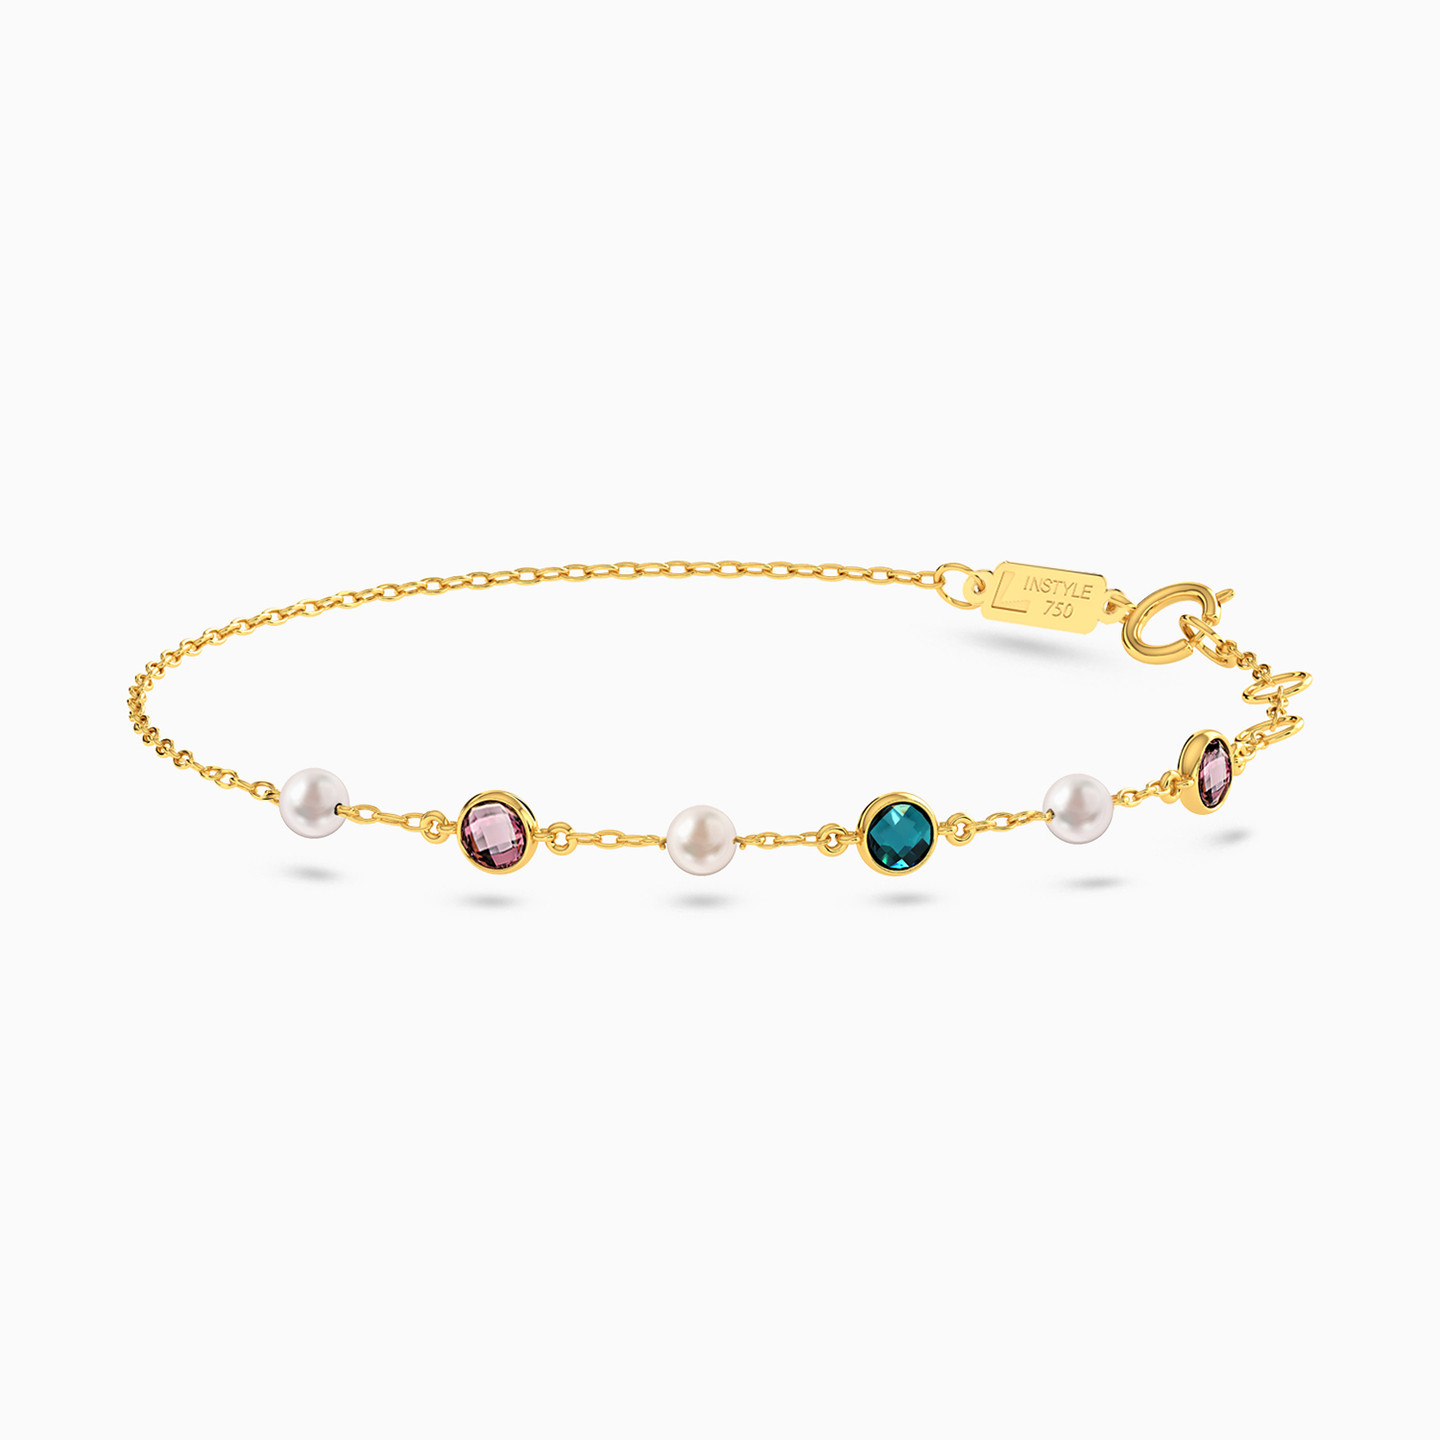 18K Gold Colored Stones Chain Bracelet - 4